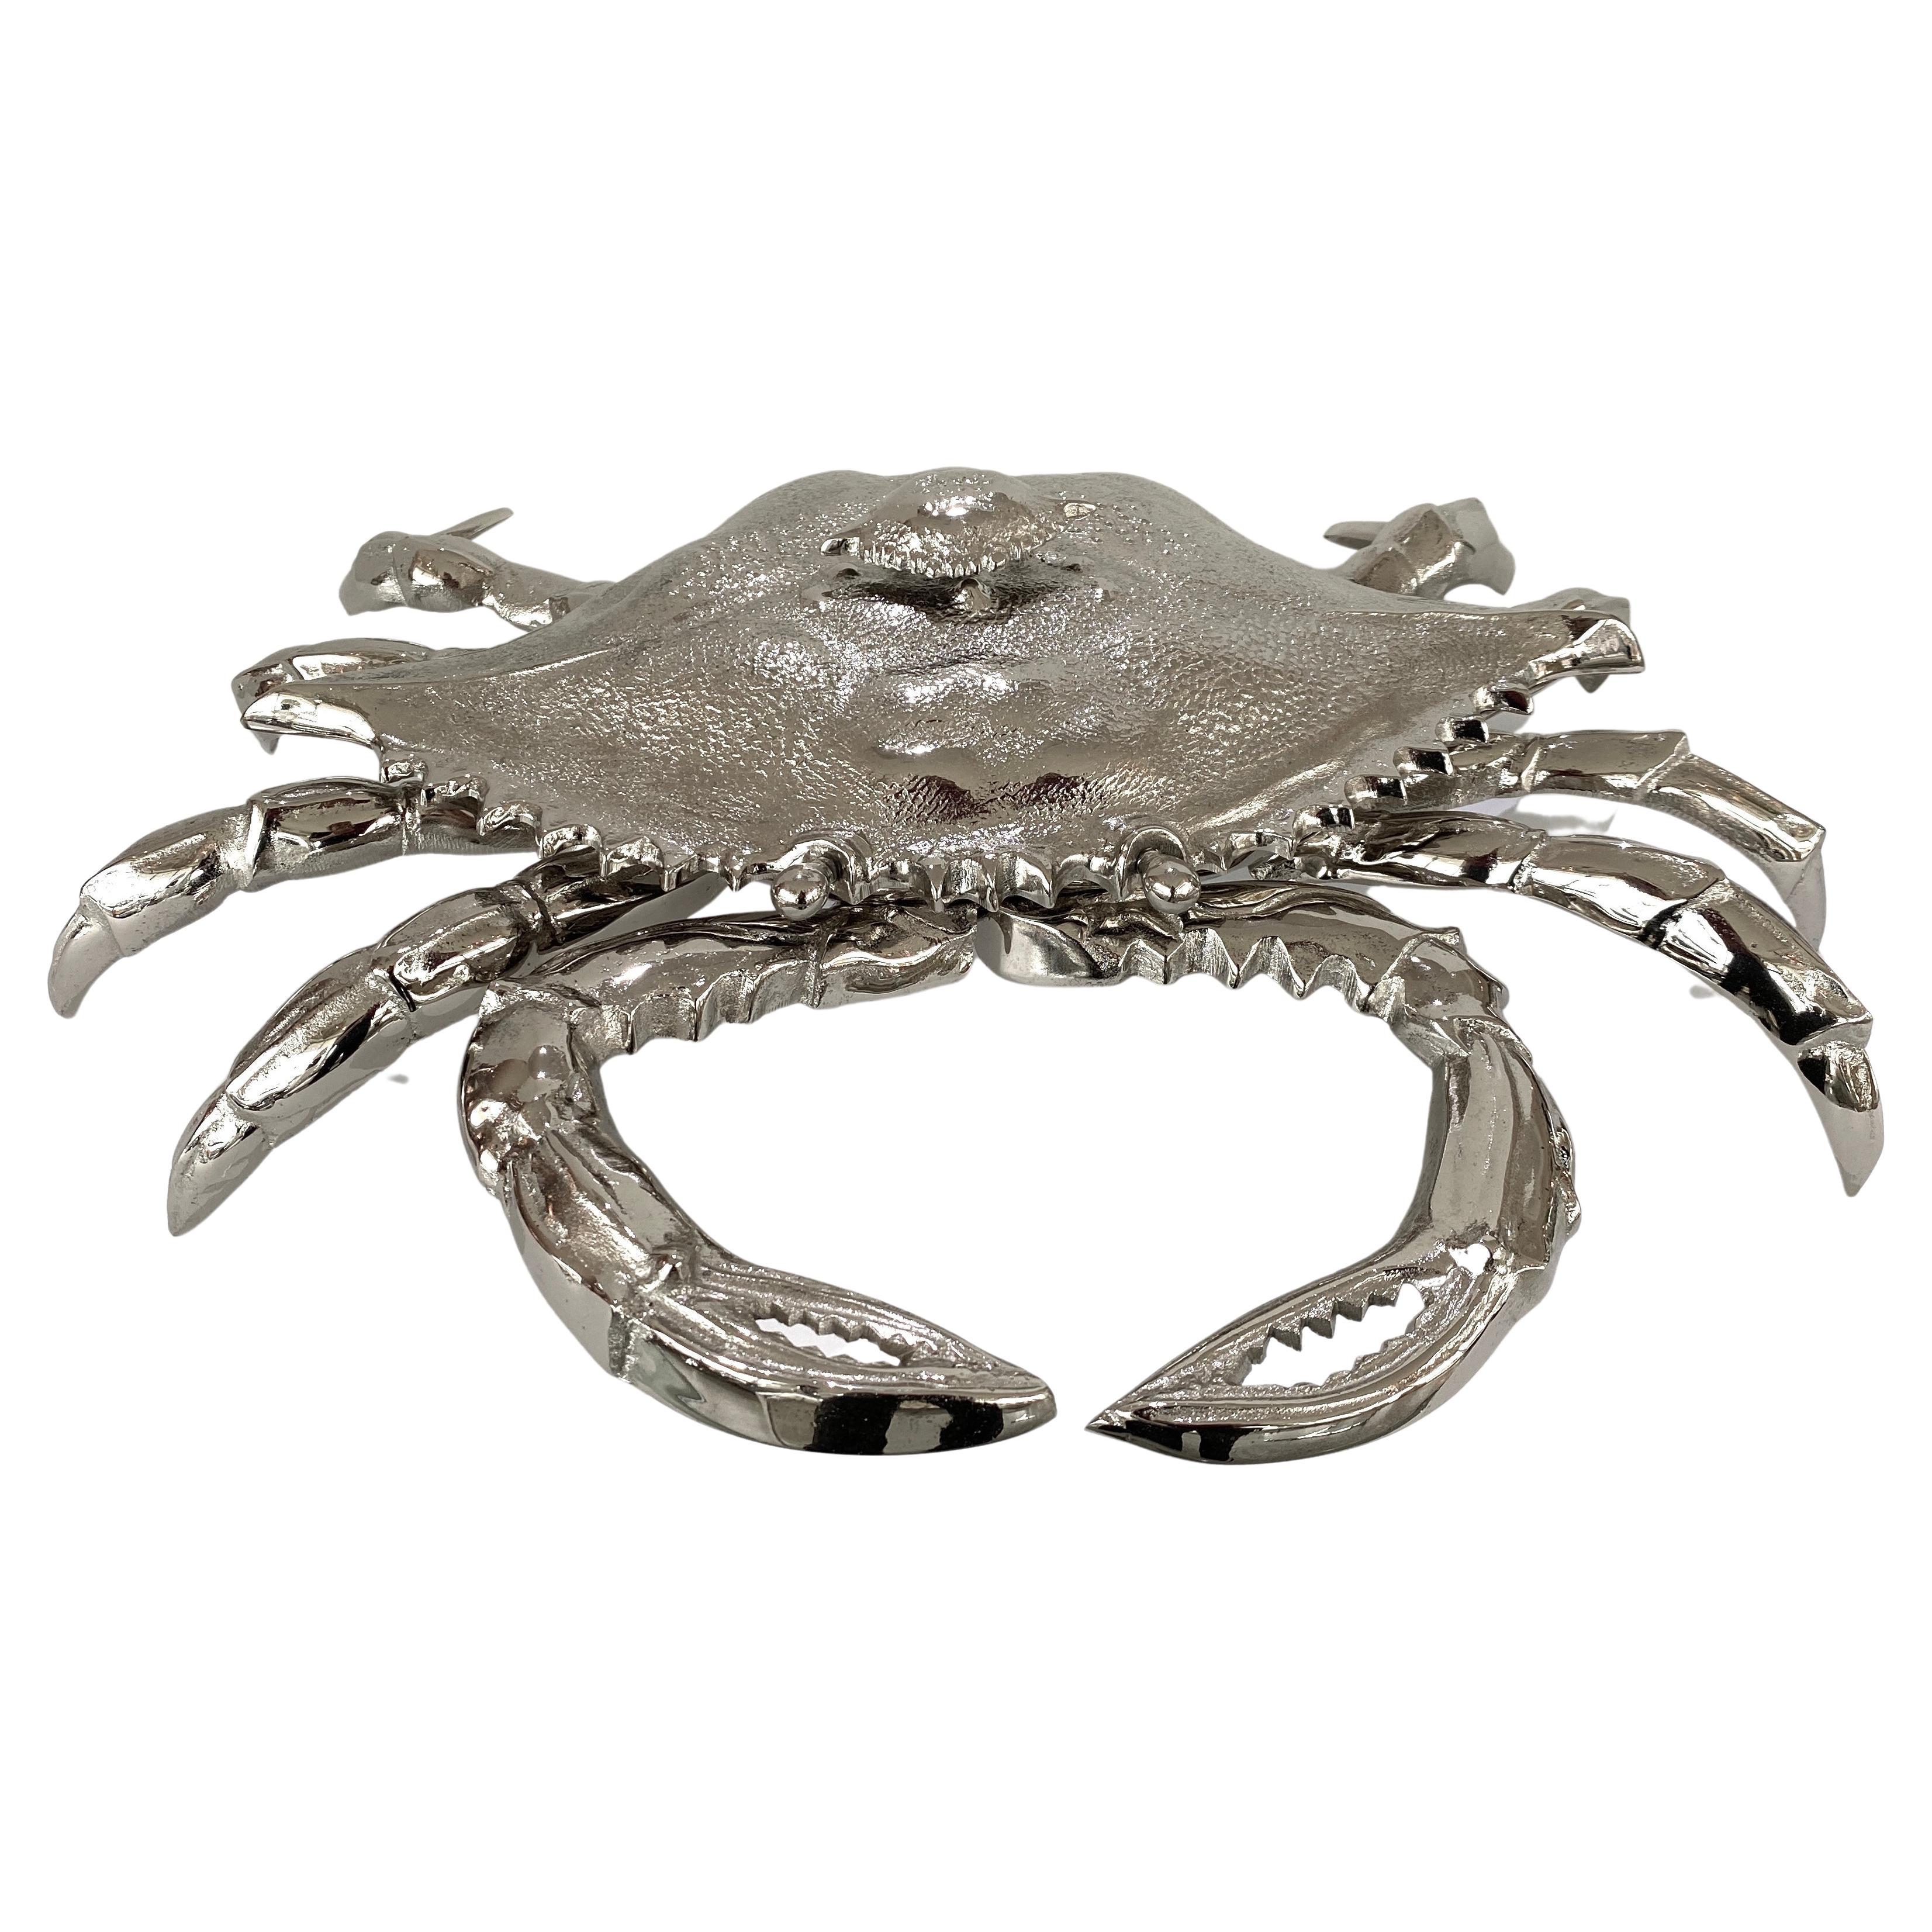 Nickel Plated Crab Form Figure by Angel & Zevallos